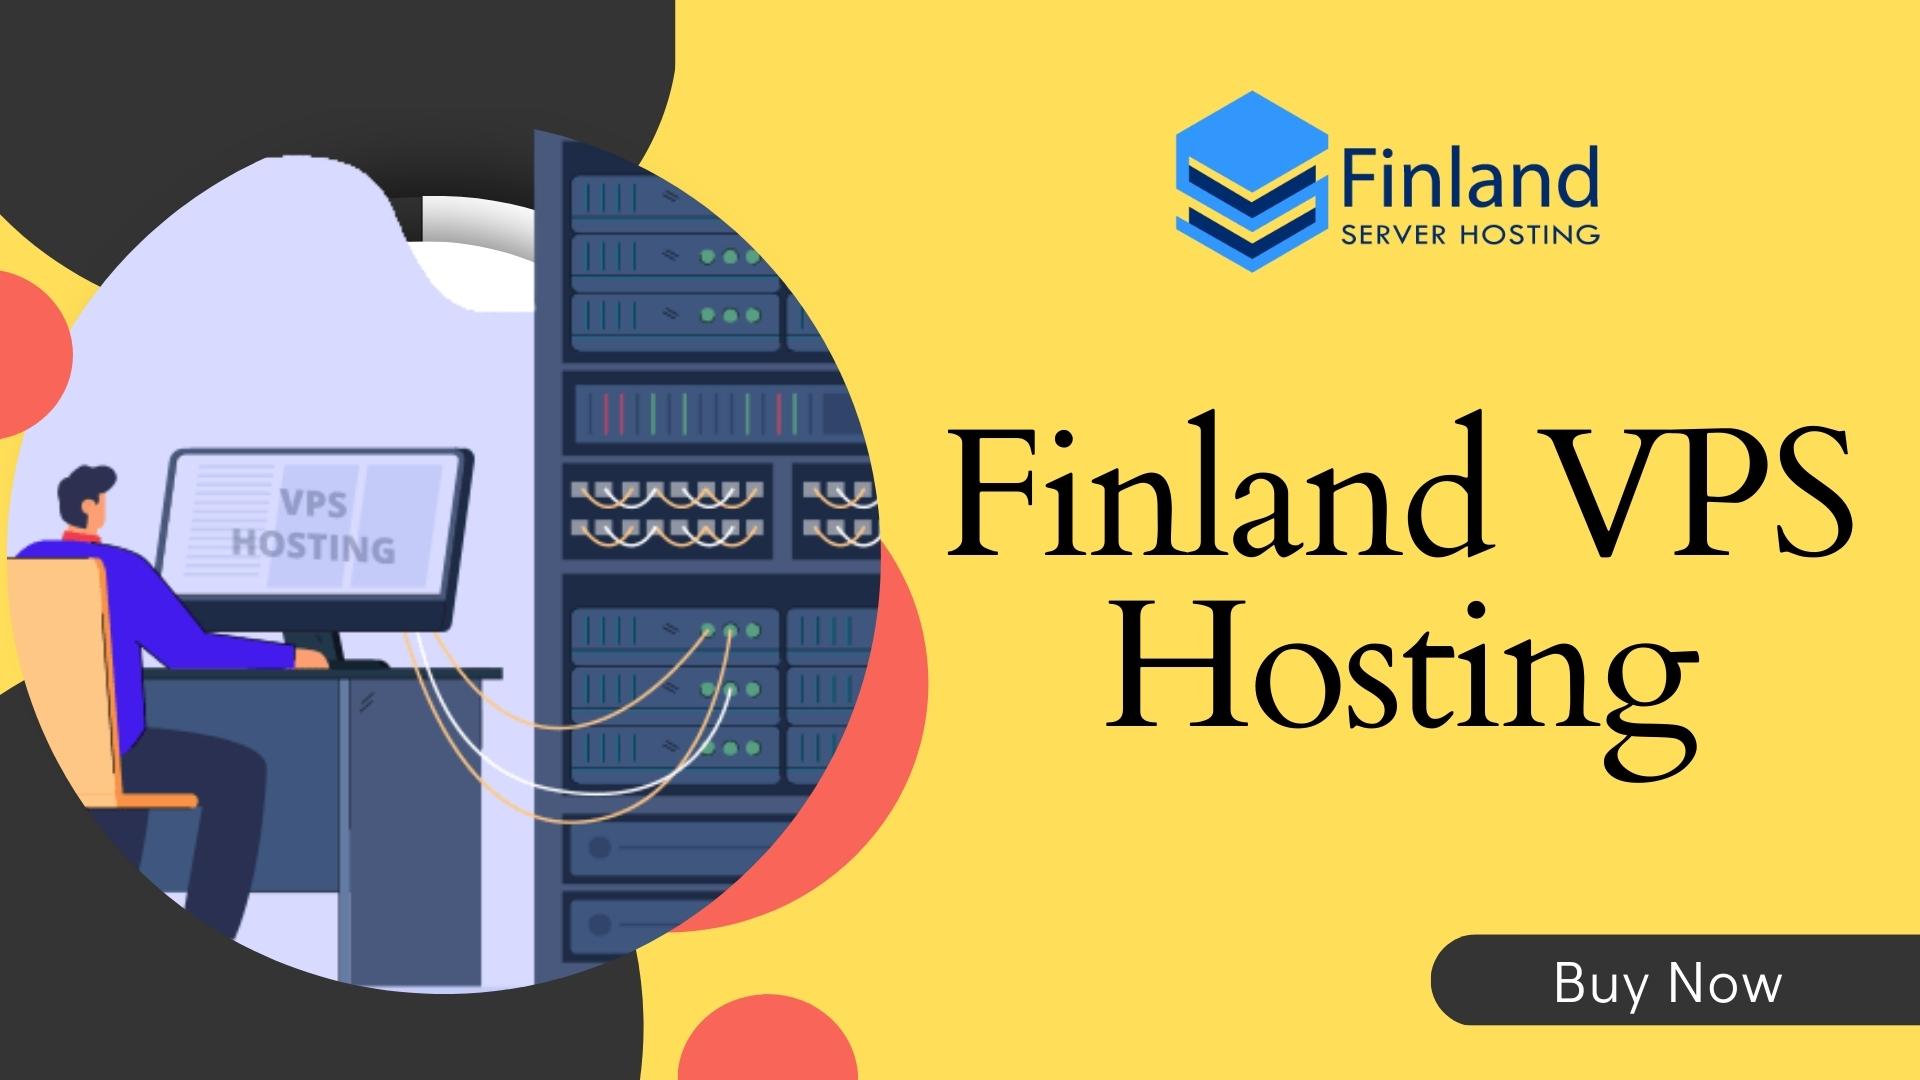 Finland VPS Hosting